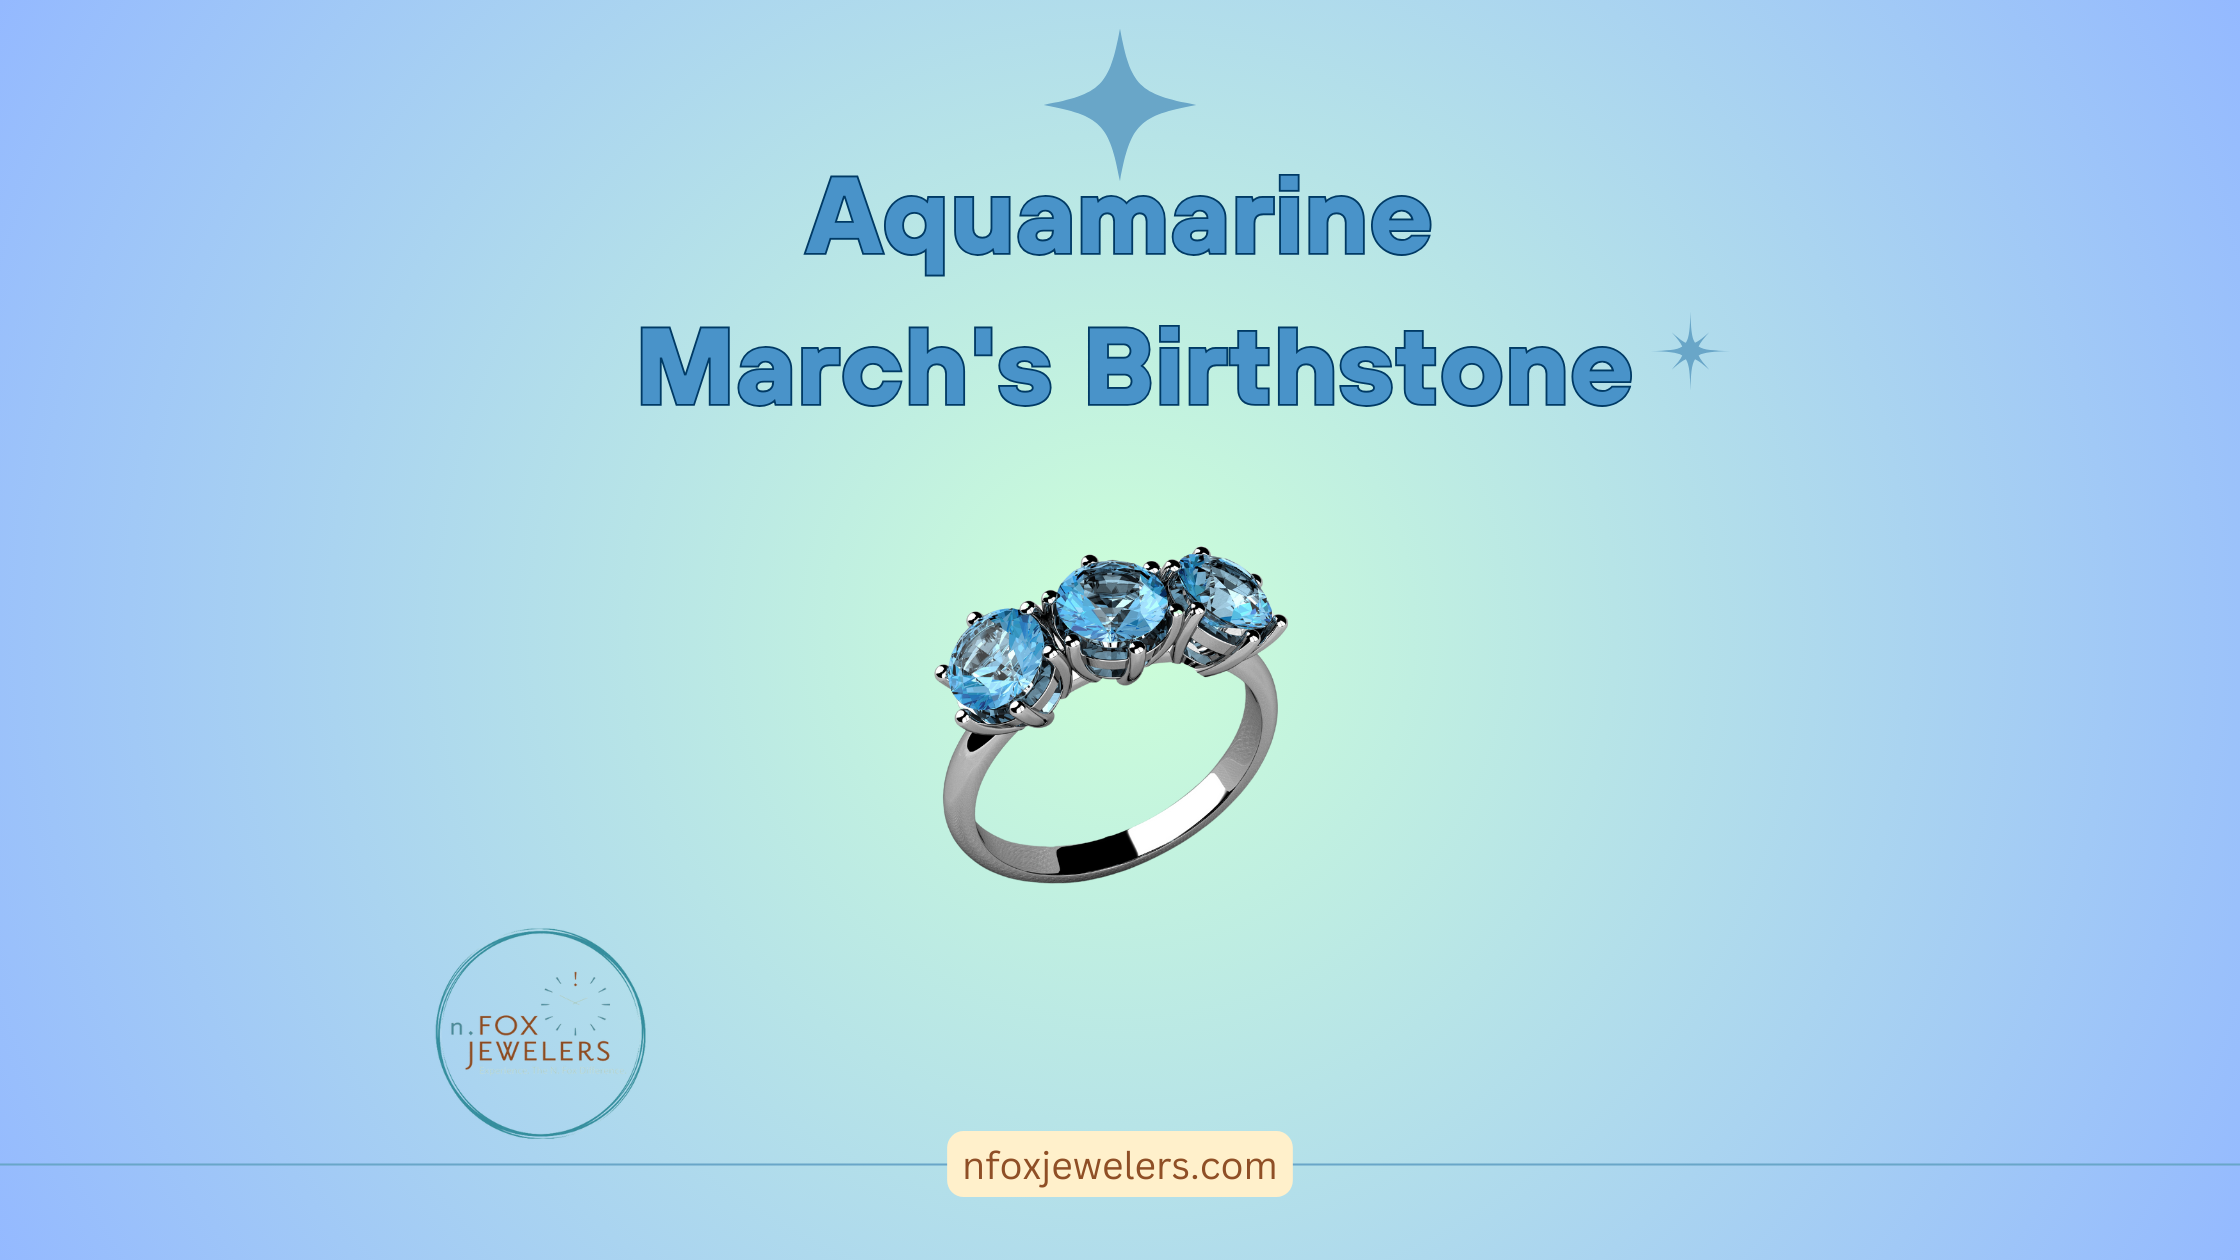 Aquamarine: The Serene Beauty of March's Birthstone